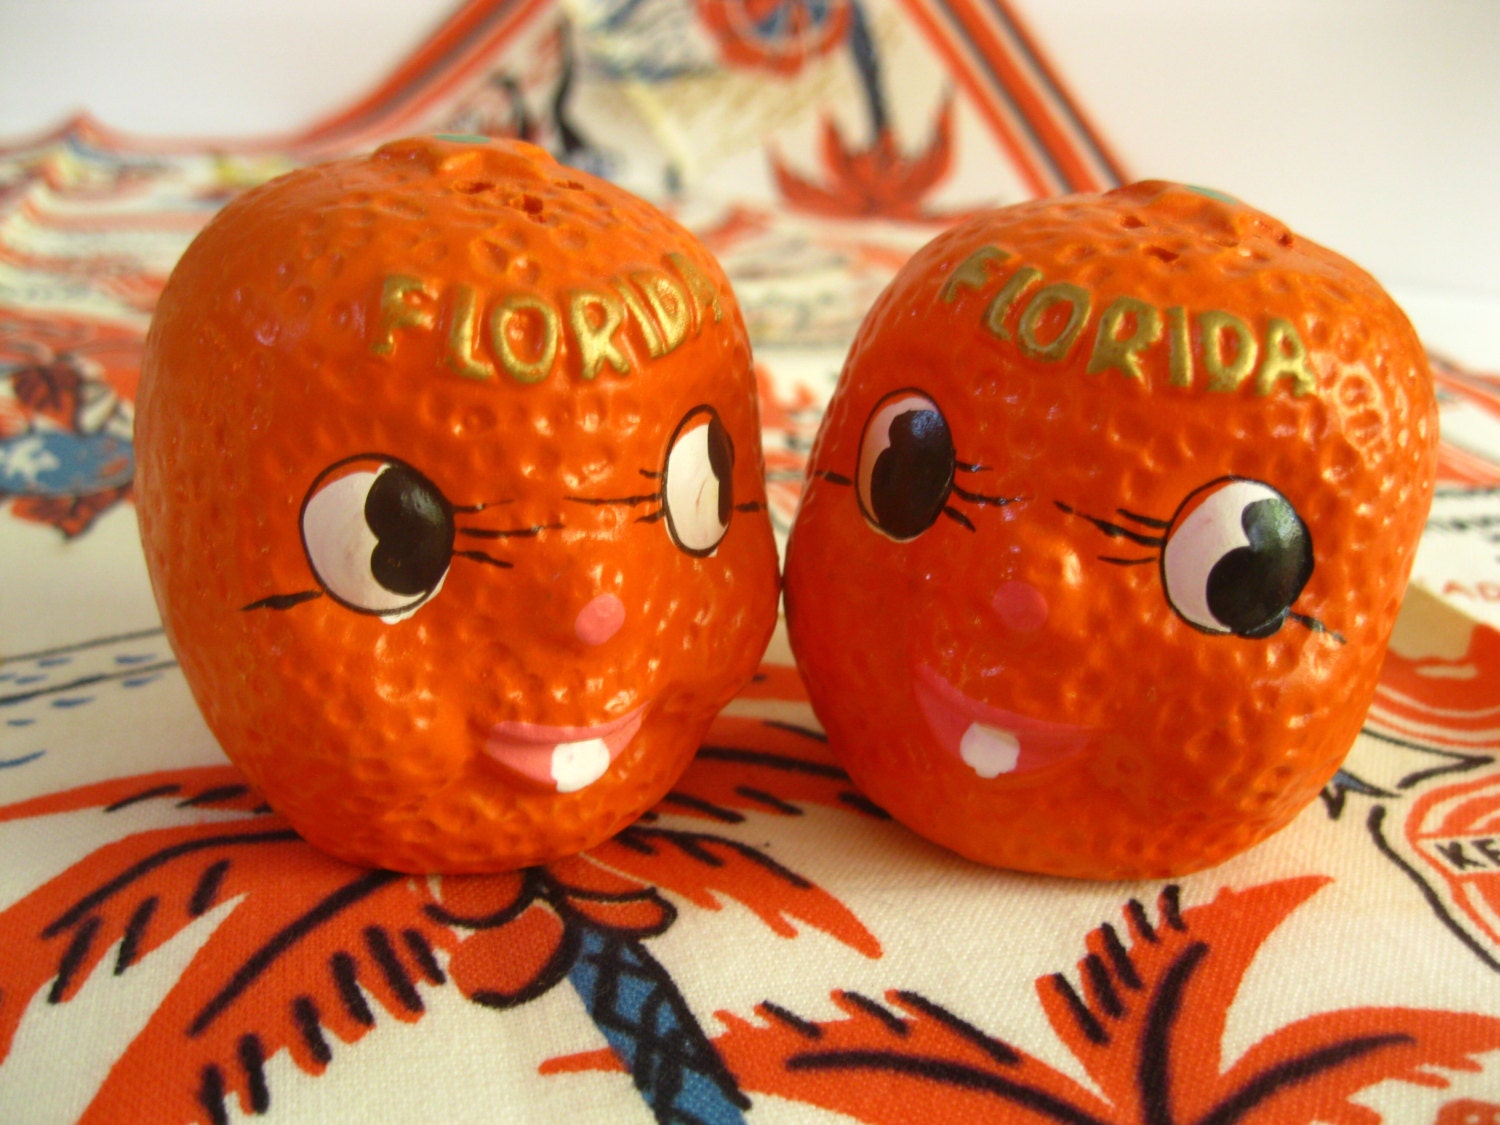 Vintage Florida oranges souvenir salt and pepper shakers 1940s or 1950s chalkware